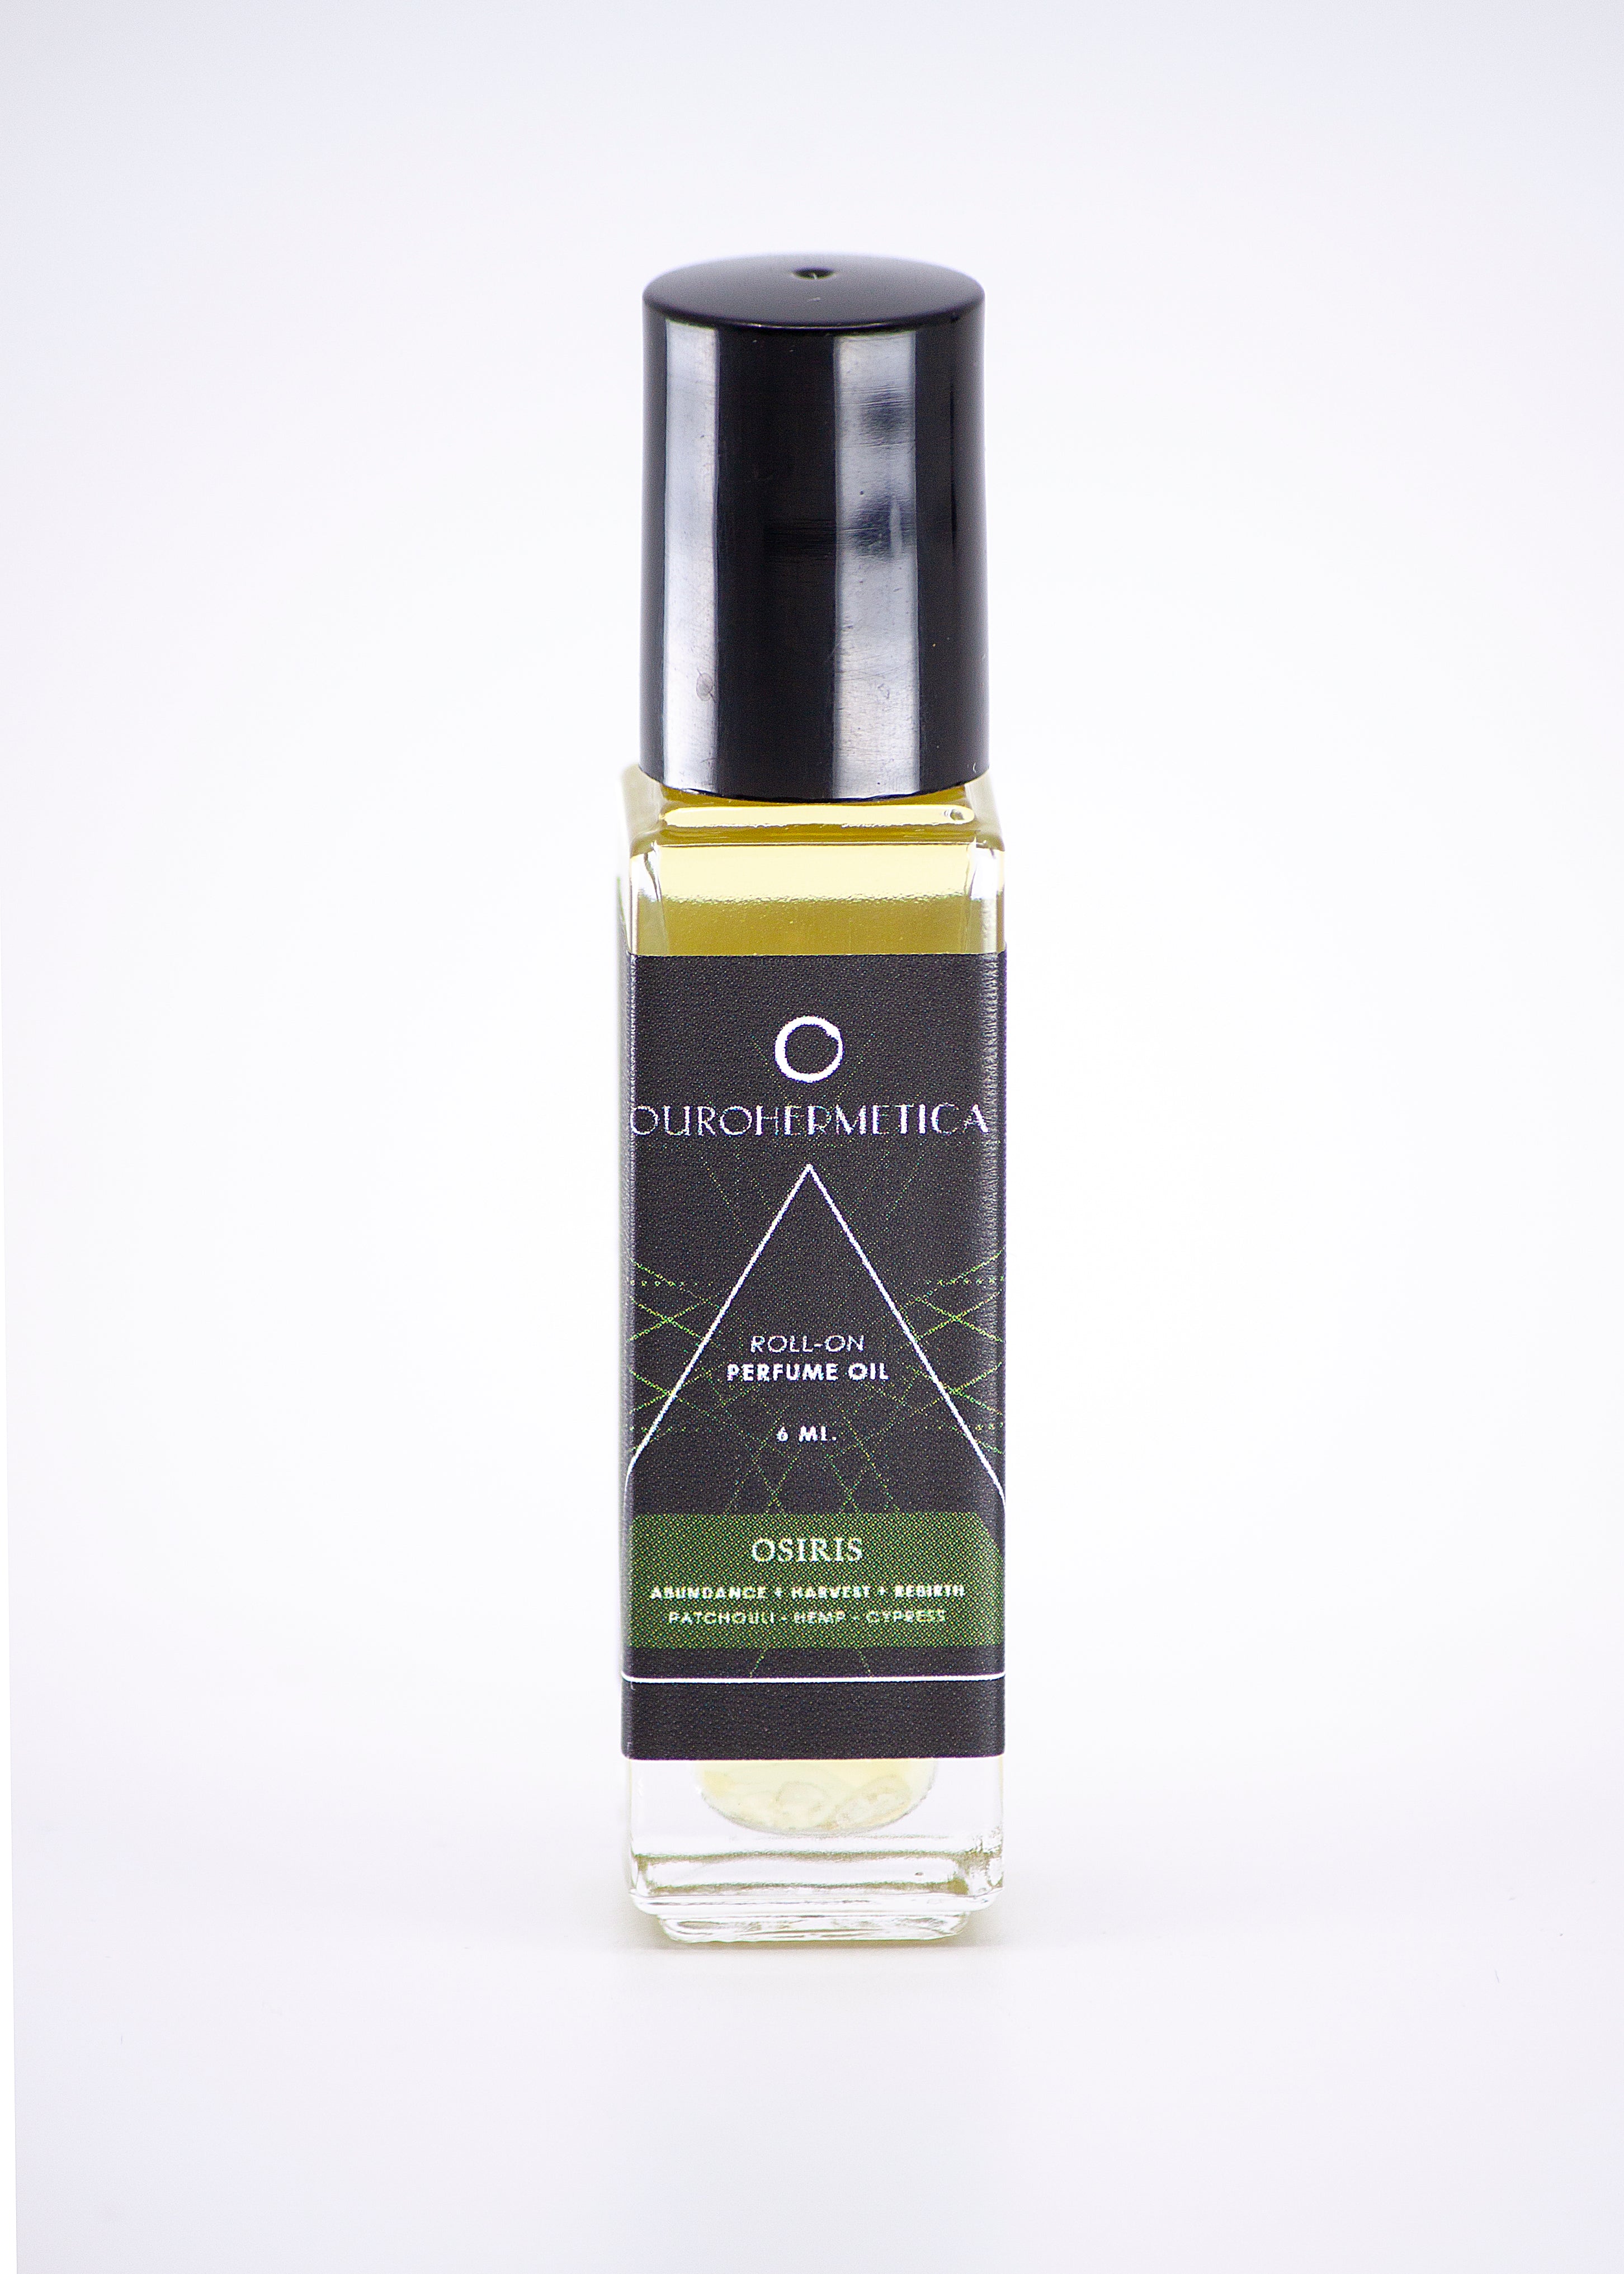 Osiris Roll-on Perfume Oil with Citrine